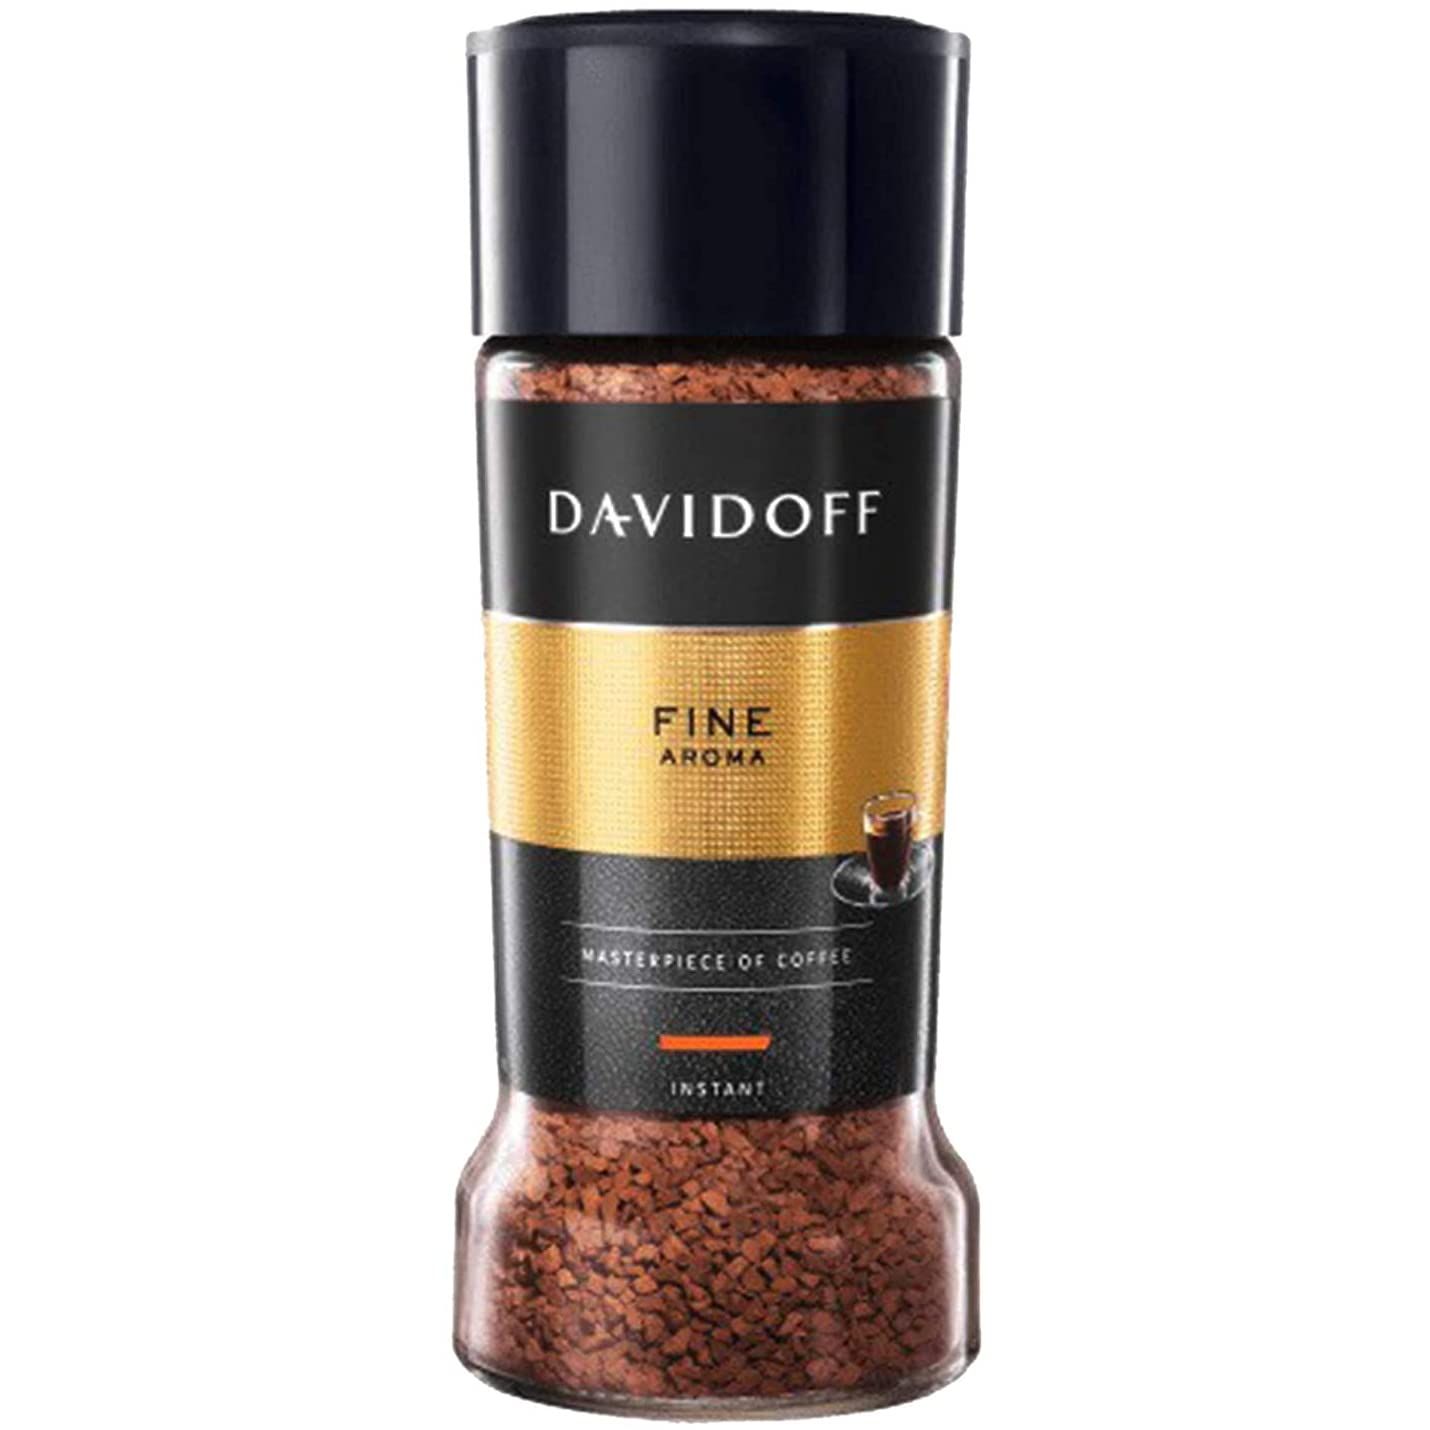 Davidoff Fine Aroma Instant Coffee Image